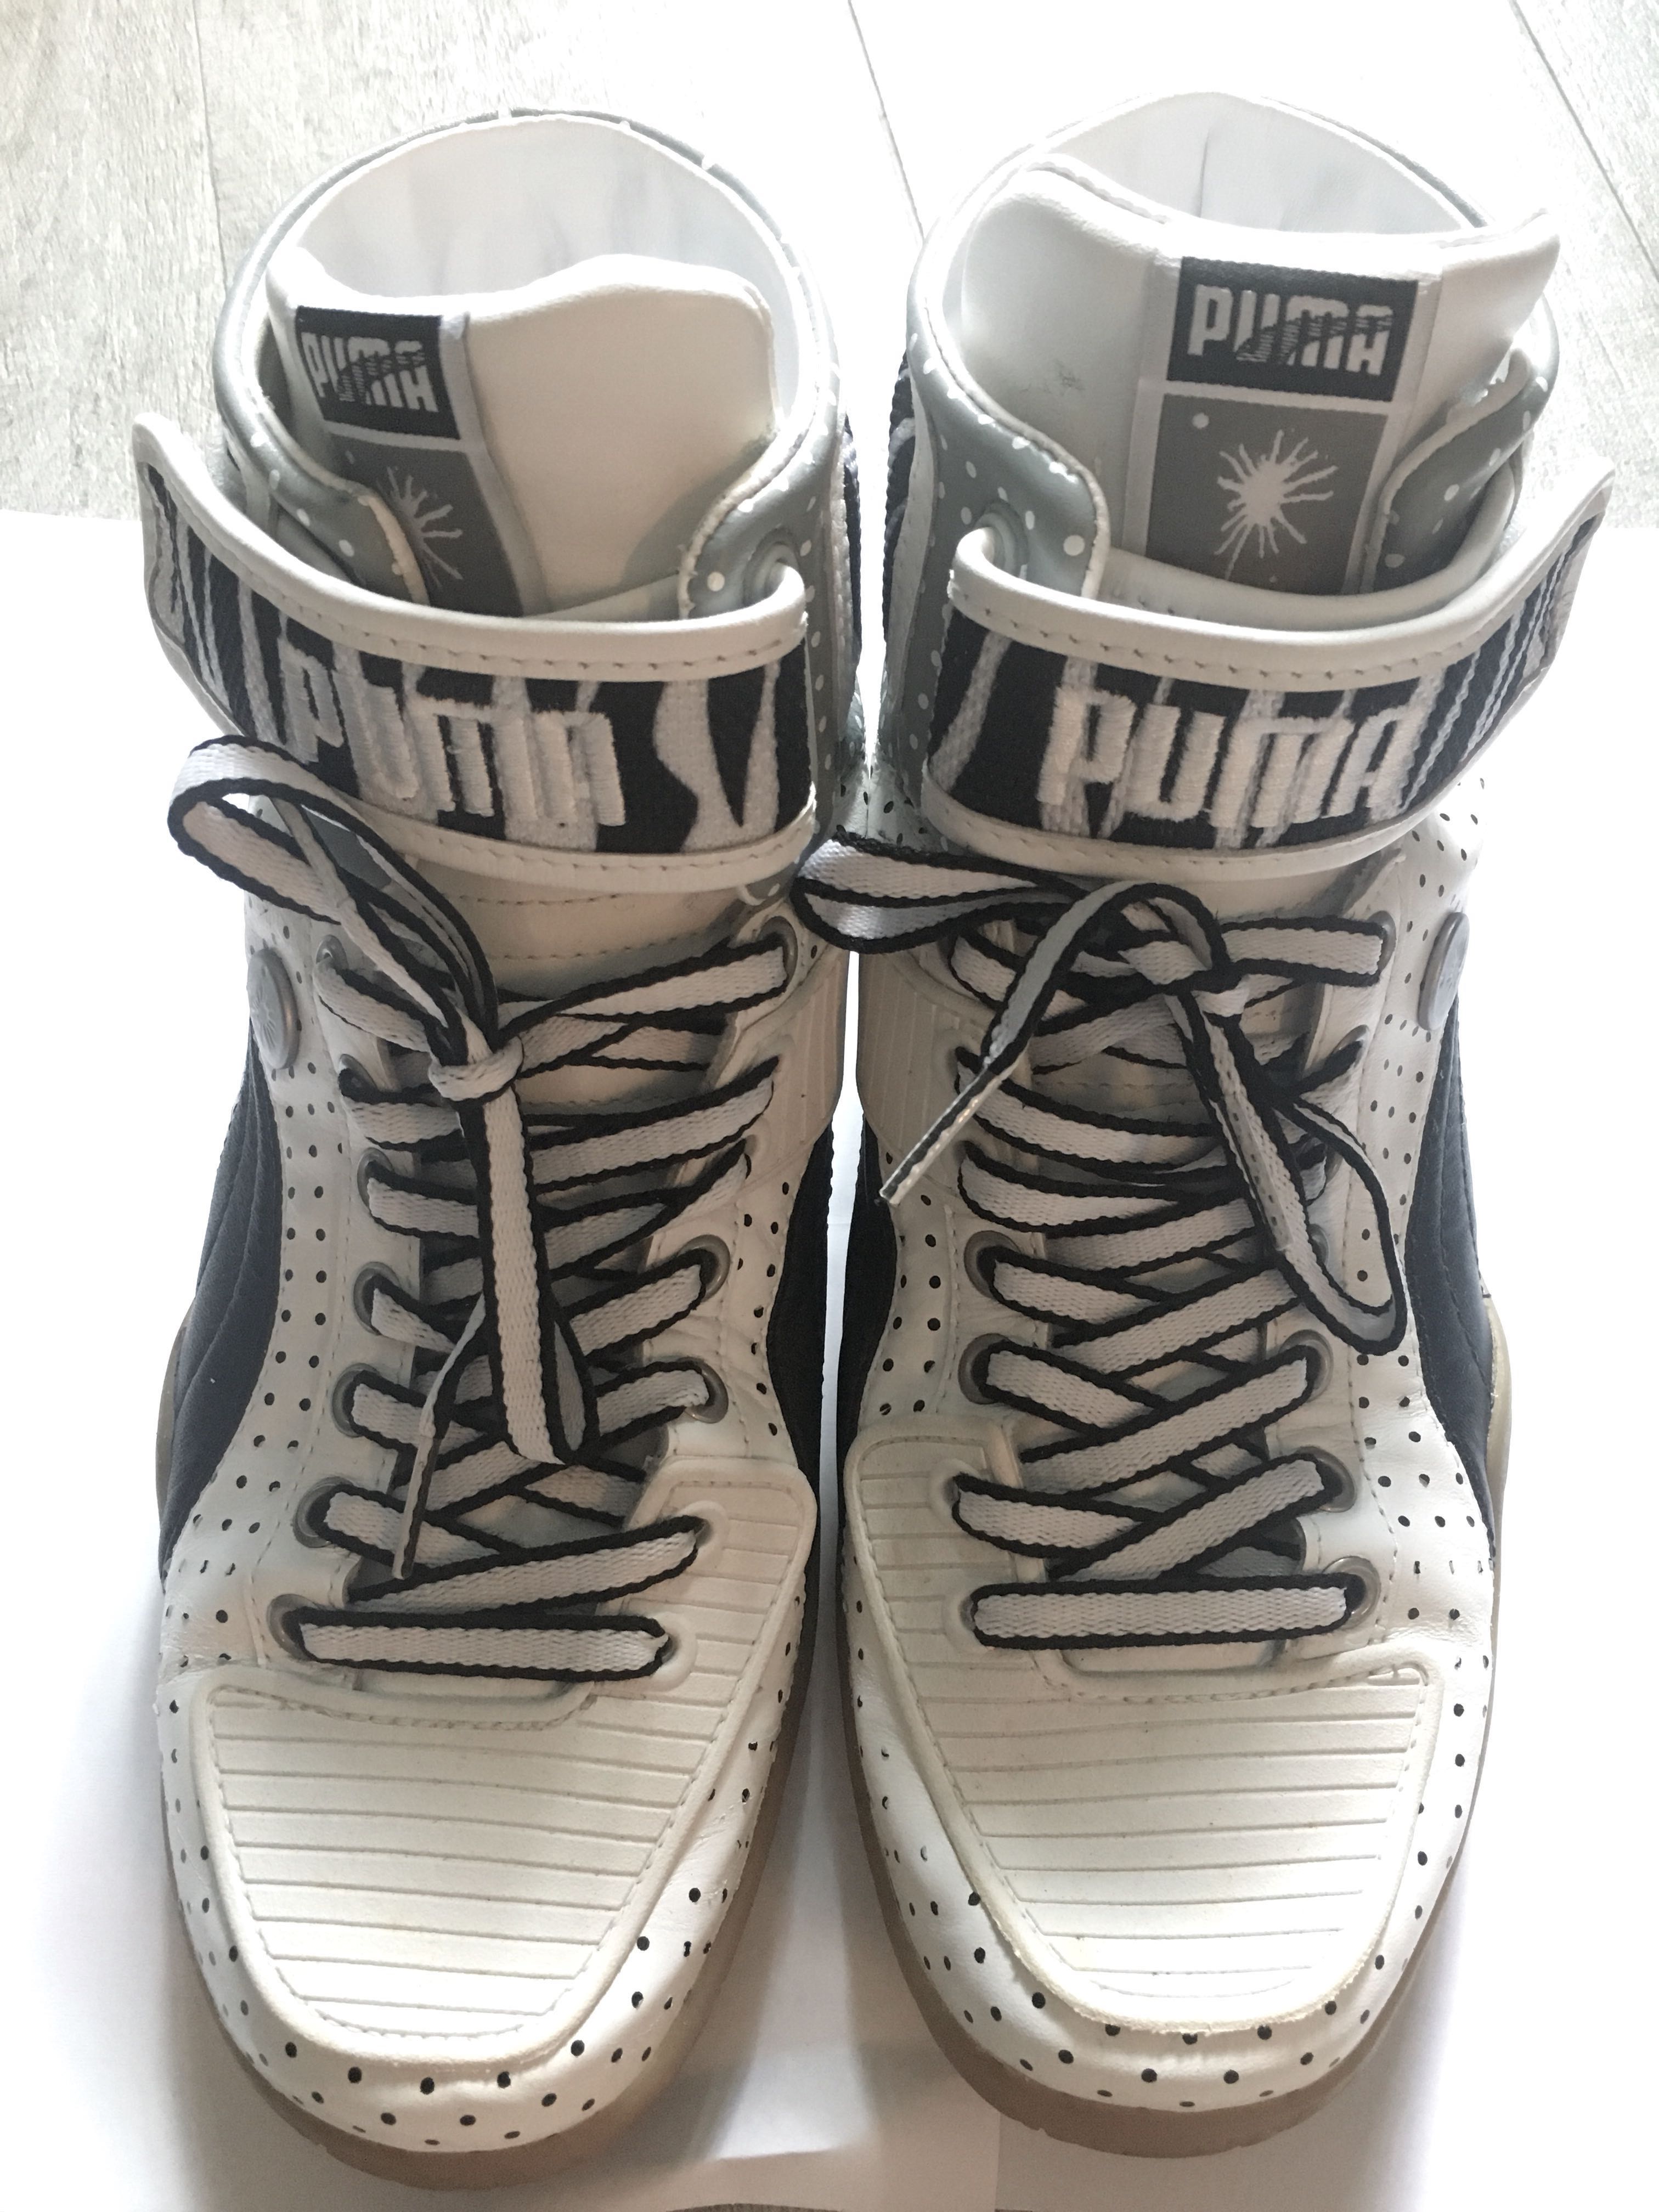 Puma stylish sneakers 潮流時尚波鞋 